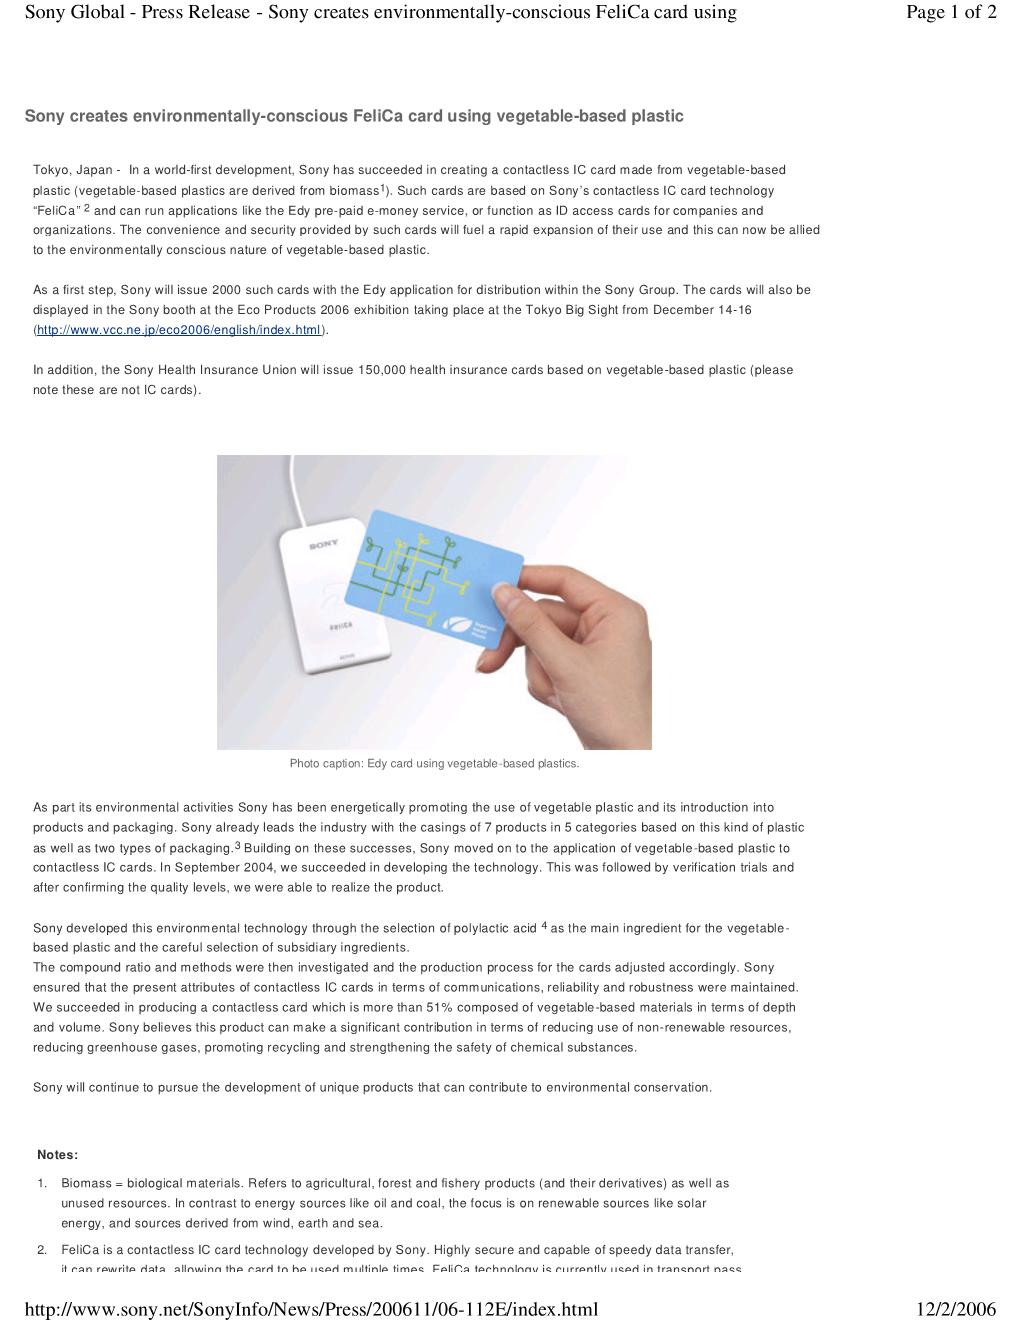 Sony Creates Environmentally-Conscious Felica Card Using Page 1 of 2